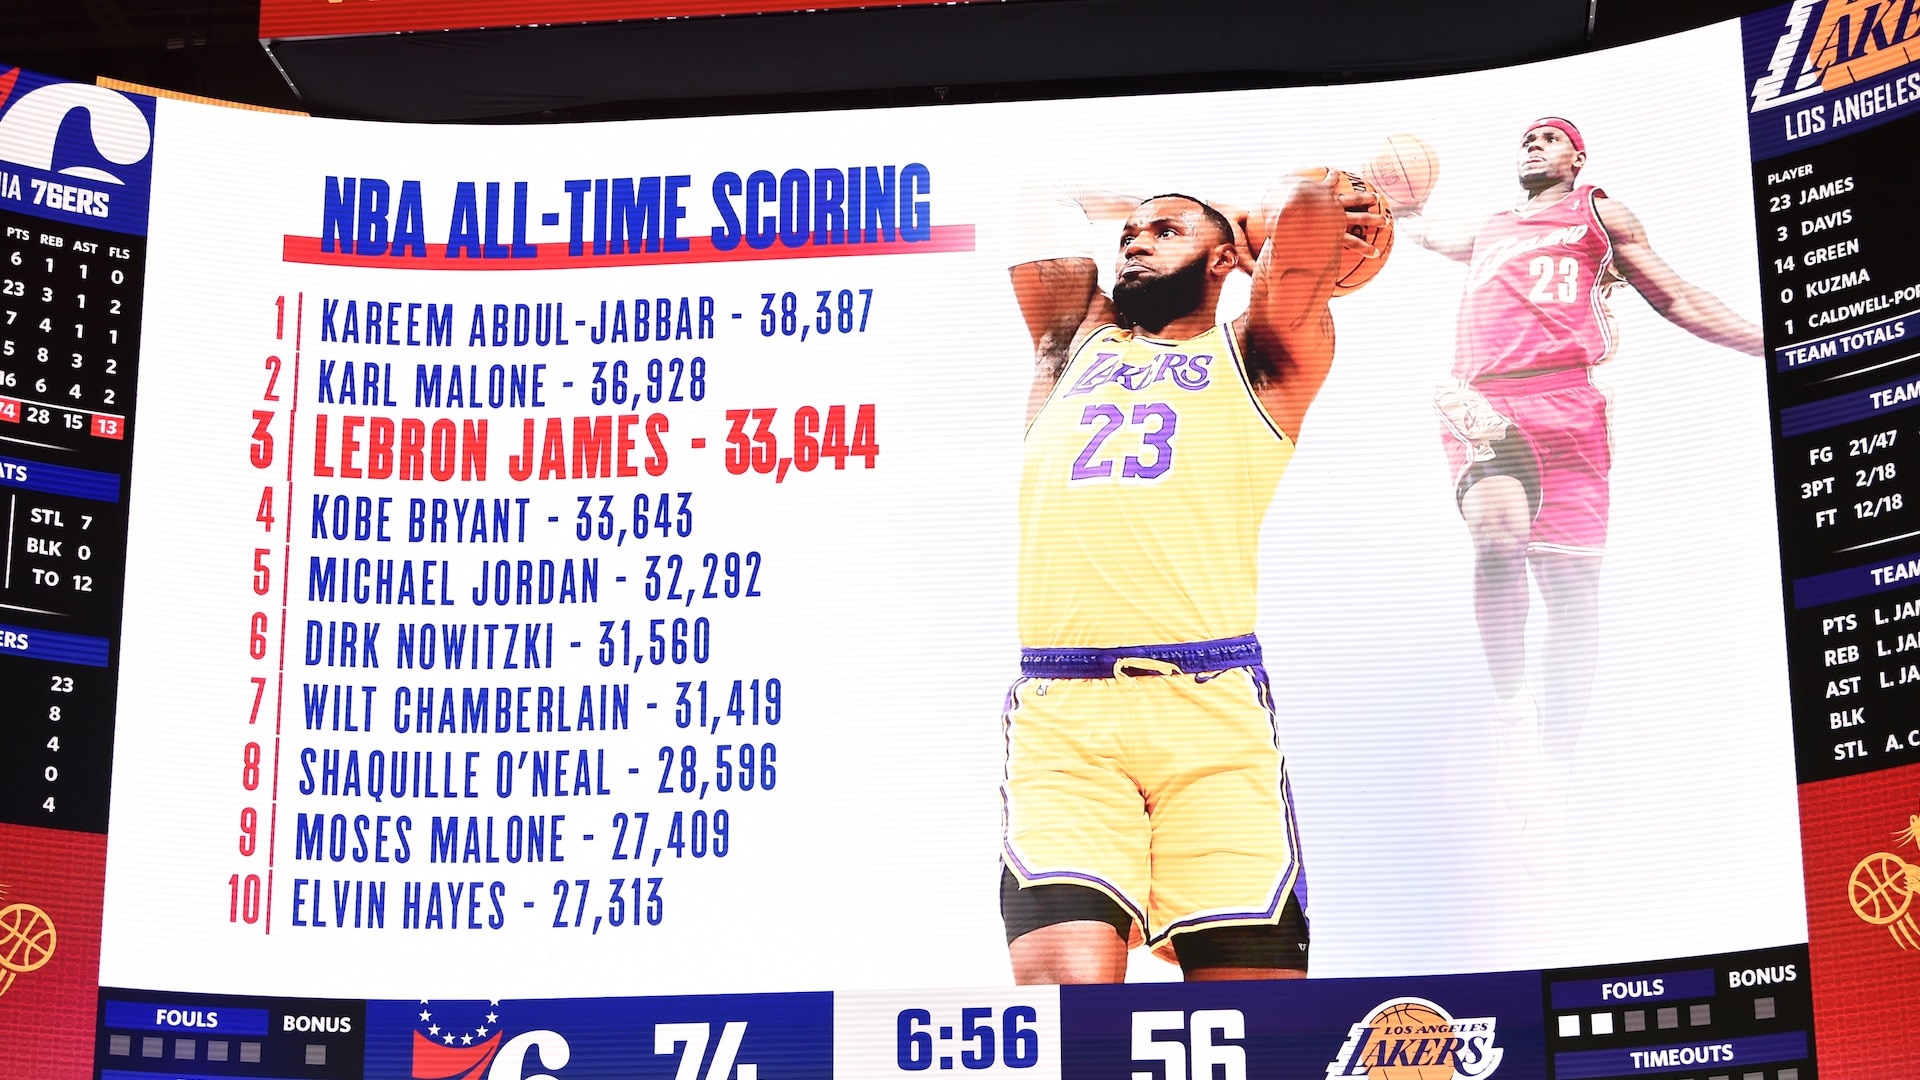 LeBron James passes Kobe Bryant for 3rd in career points | NBA.com